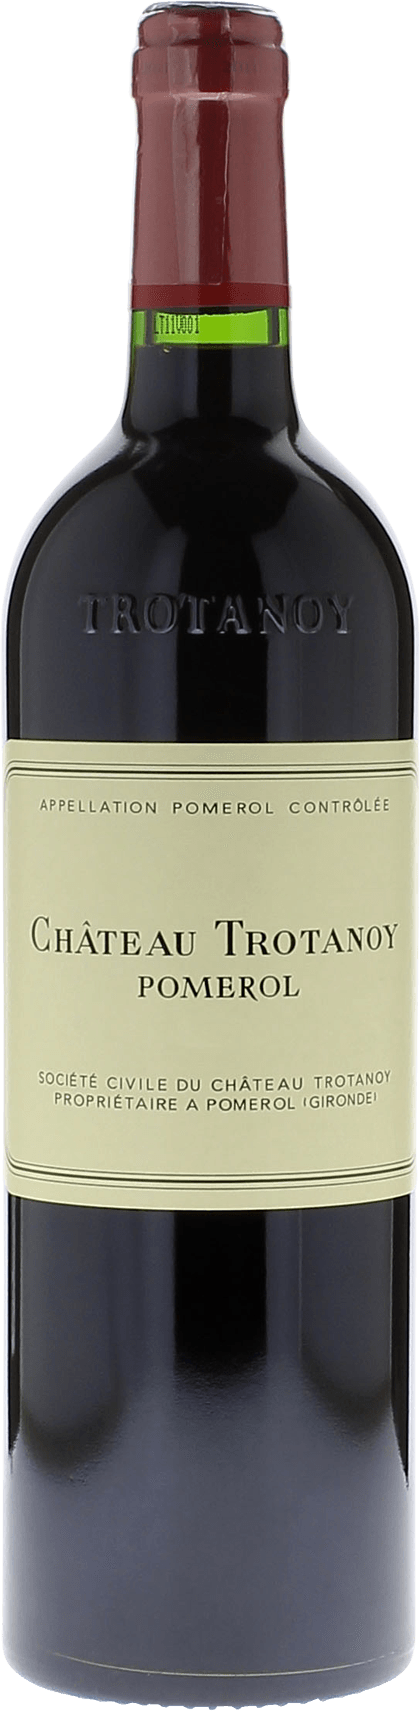 Trotanoy 2006  Pomerol, Bordeaux rouge